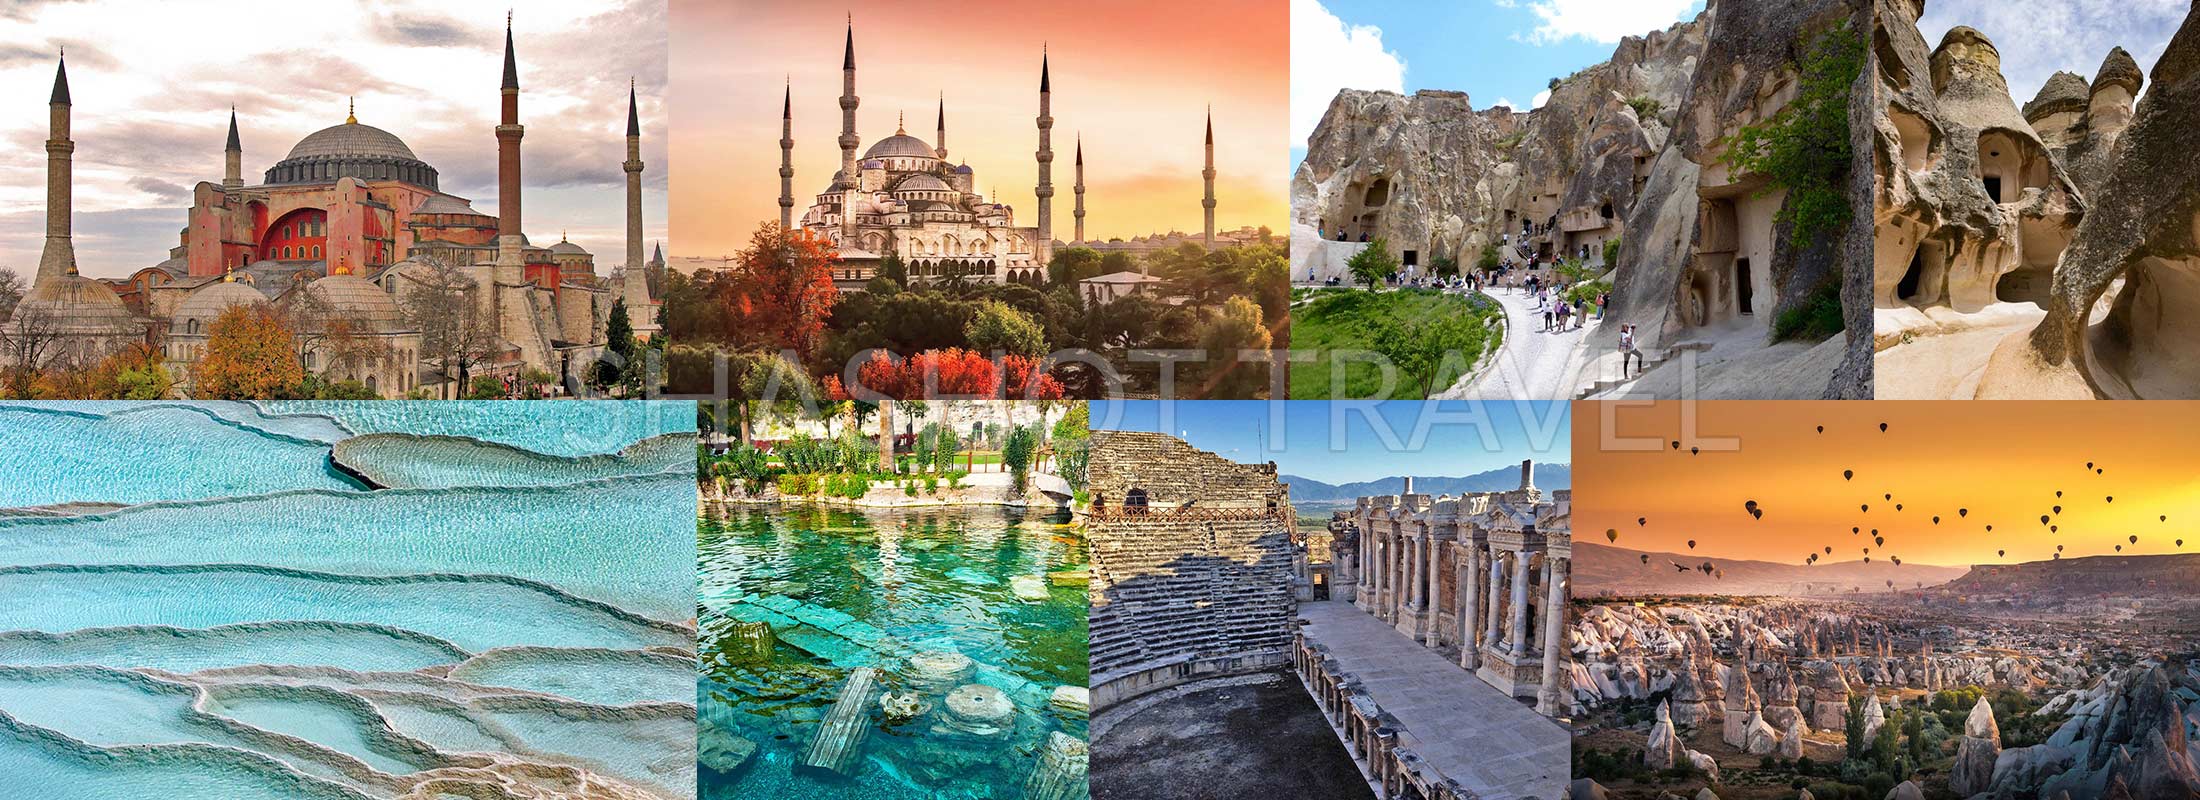 6-DAYS-TURKEY-PACKAGE-TOUR-ISTANBUL-CAPPADOCIA-PAMUKKALE-HIERAPOLIS-by-flight